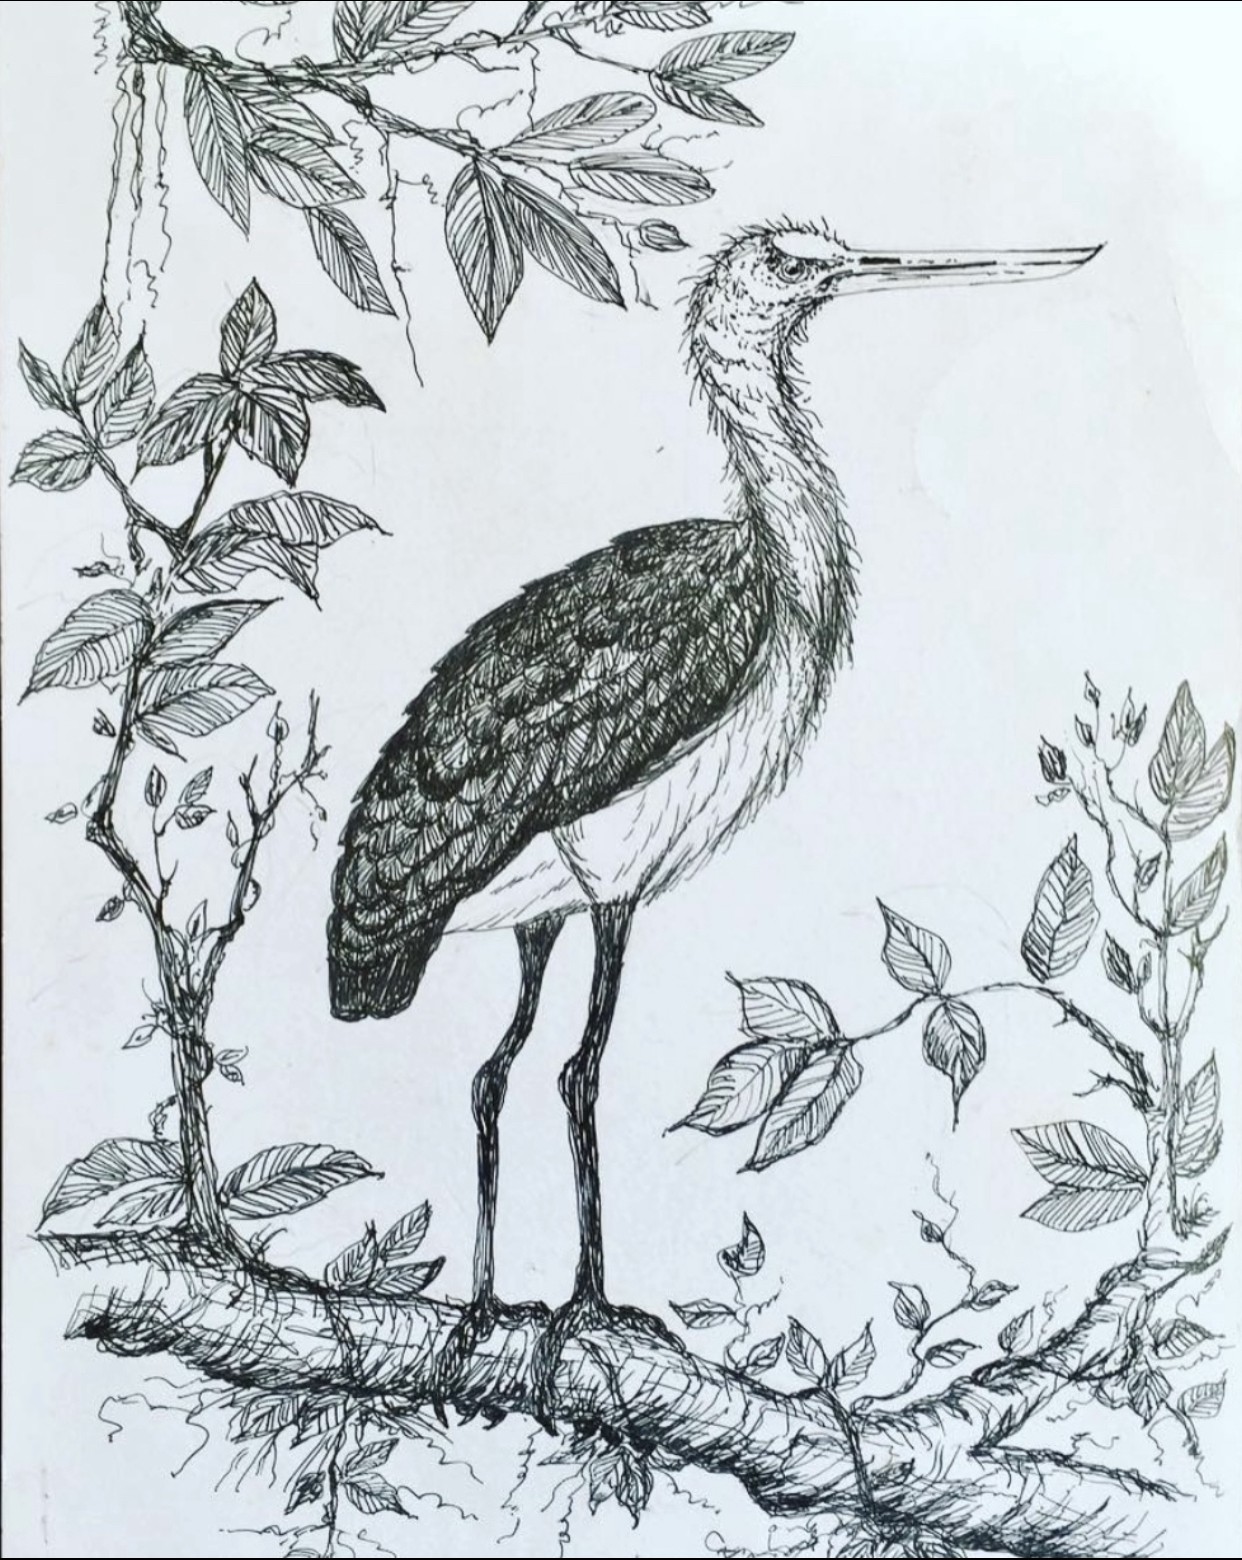 Srilanka Birds by Gamini Meegalla